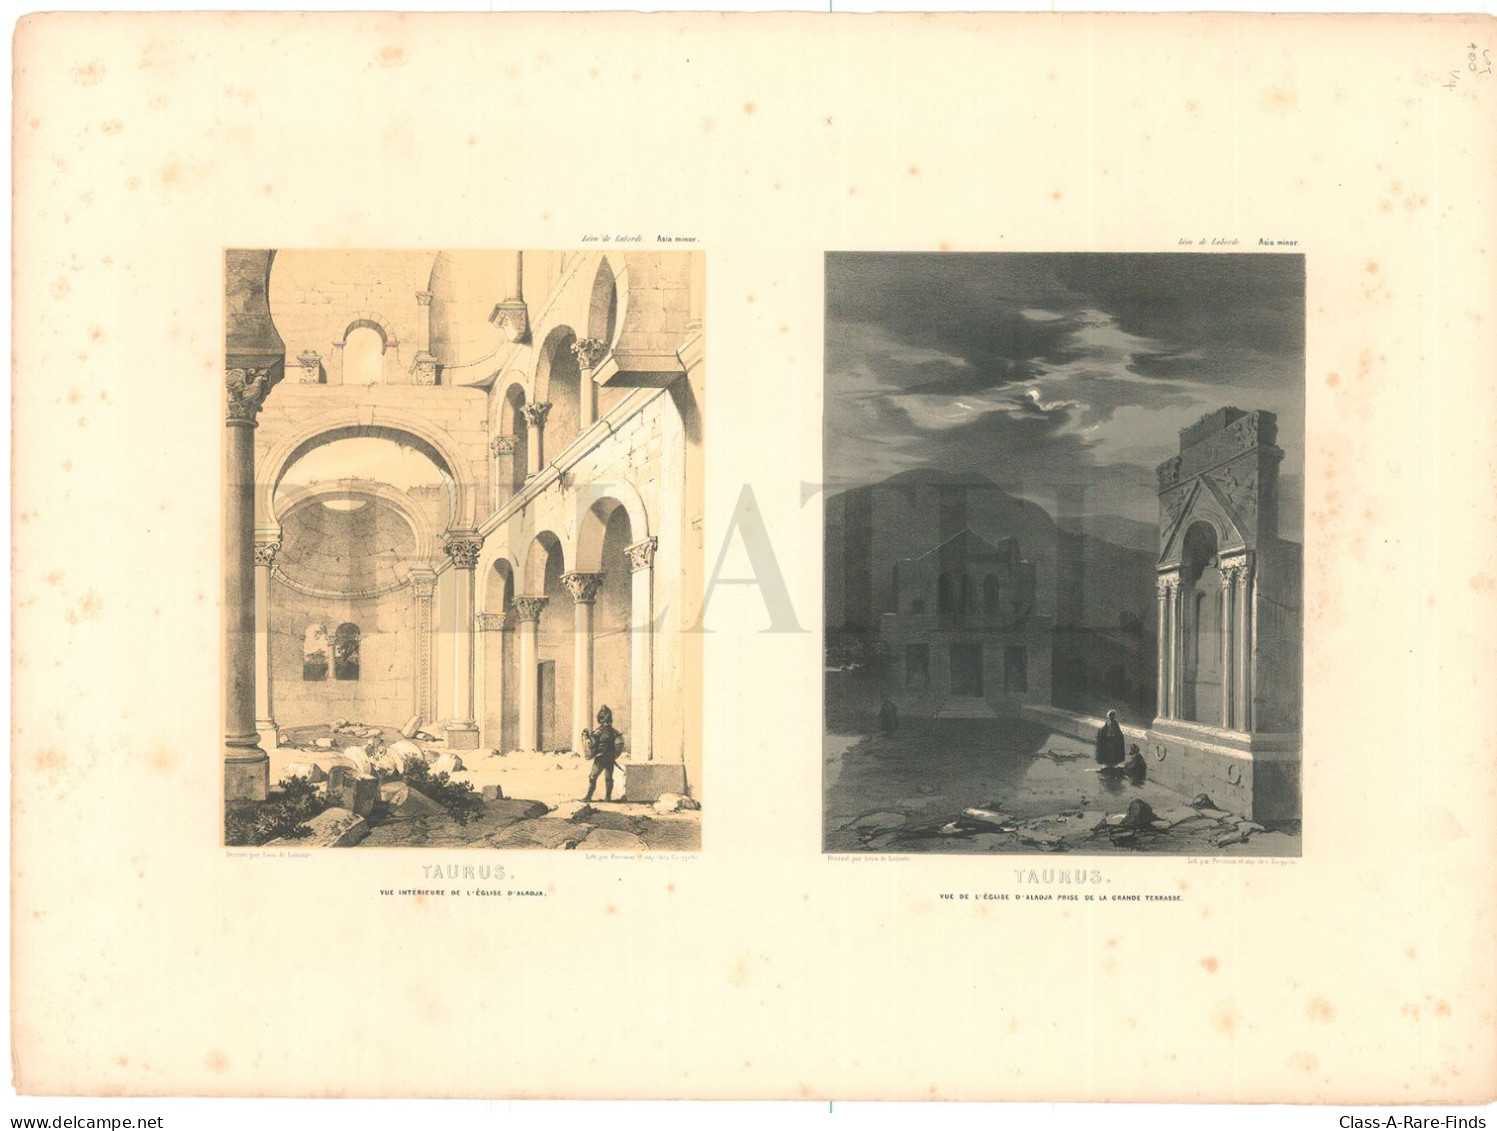 1838, LABORDE: "VOYAGE DE L'ASIE MINEURE" LITOGRAPH PLATE #69. ARCHAEOLOGY / TURKEY / ANATOLIA / SIVAS / ALACA - Archéologie